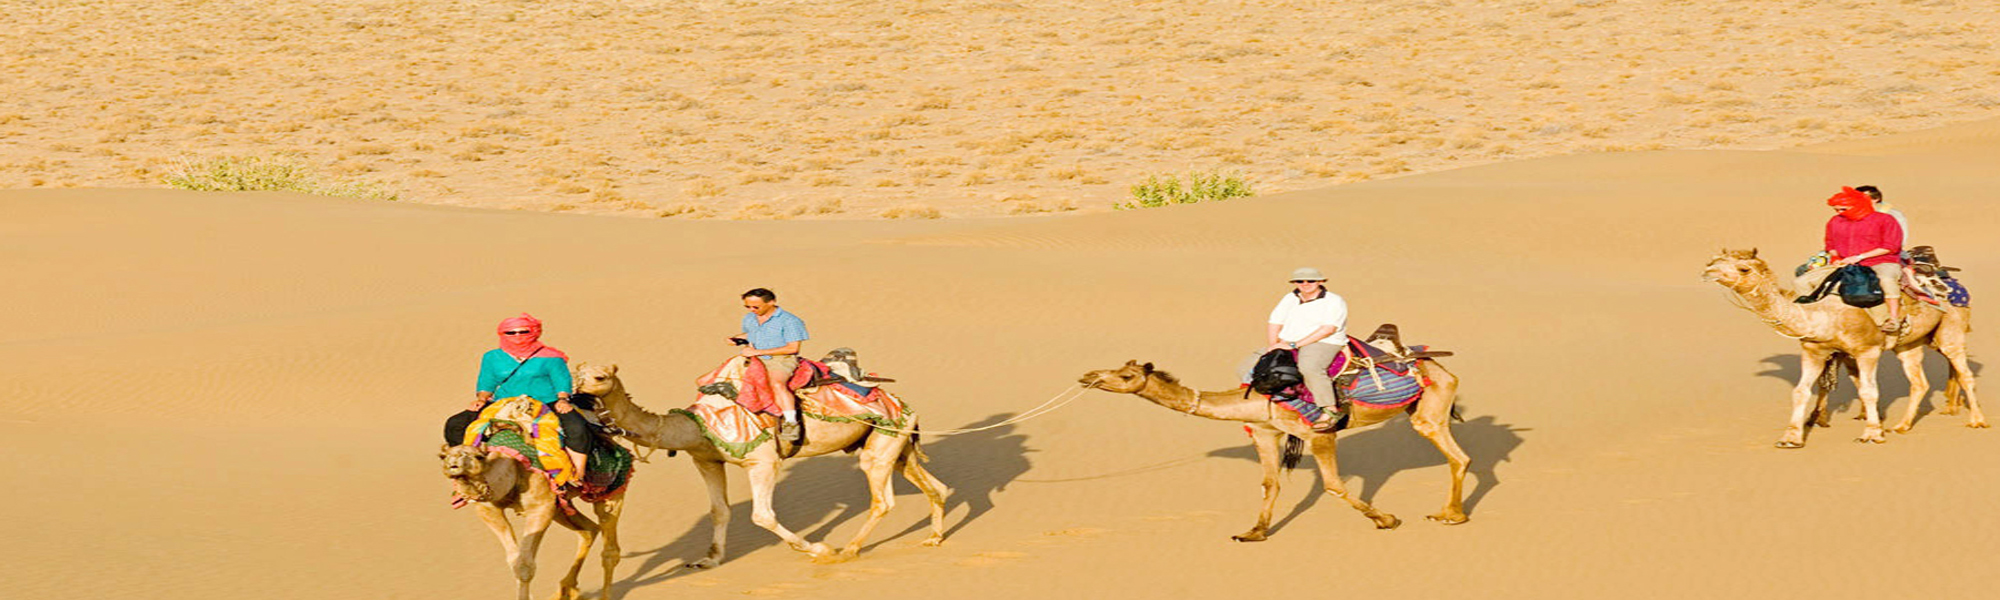 Desert Festival Tour in India with Camel Safari Tour in India